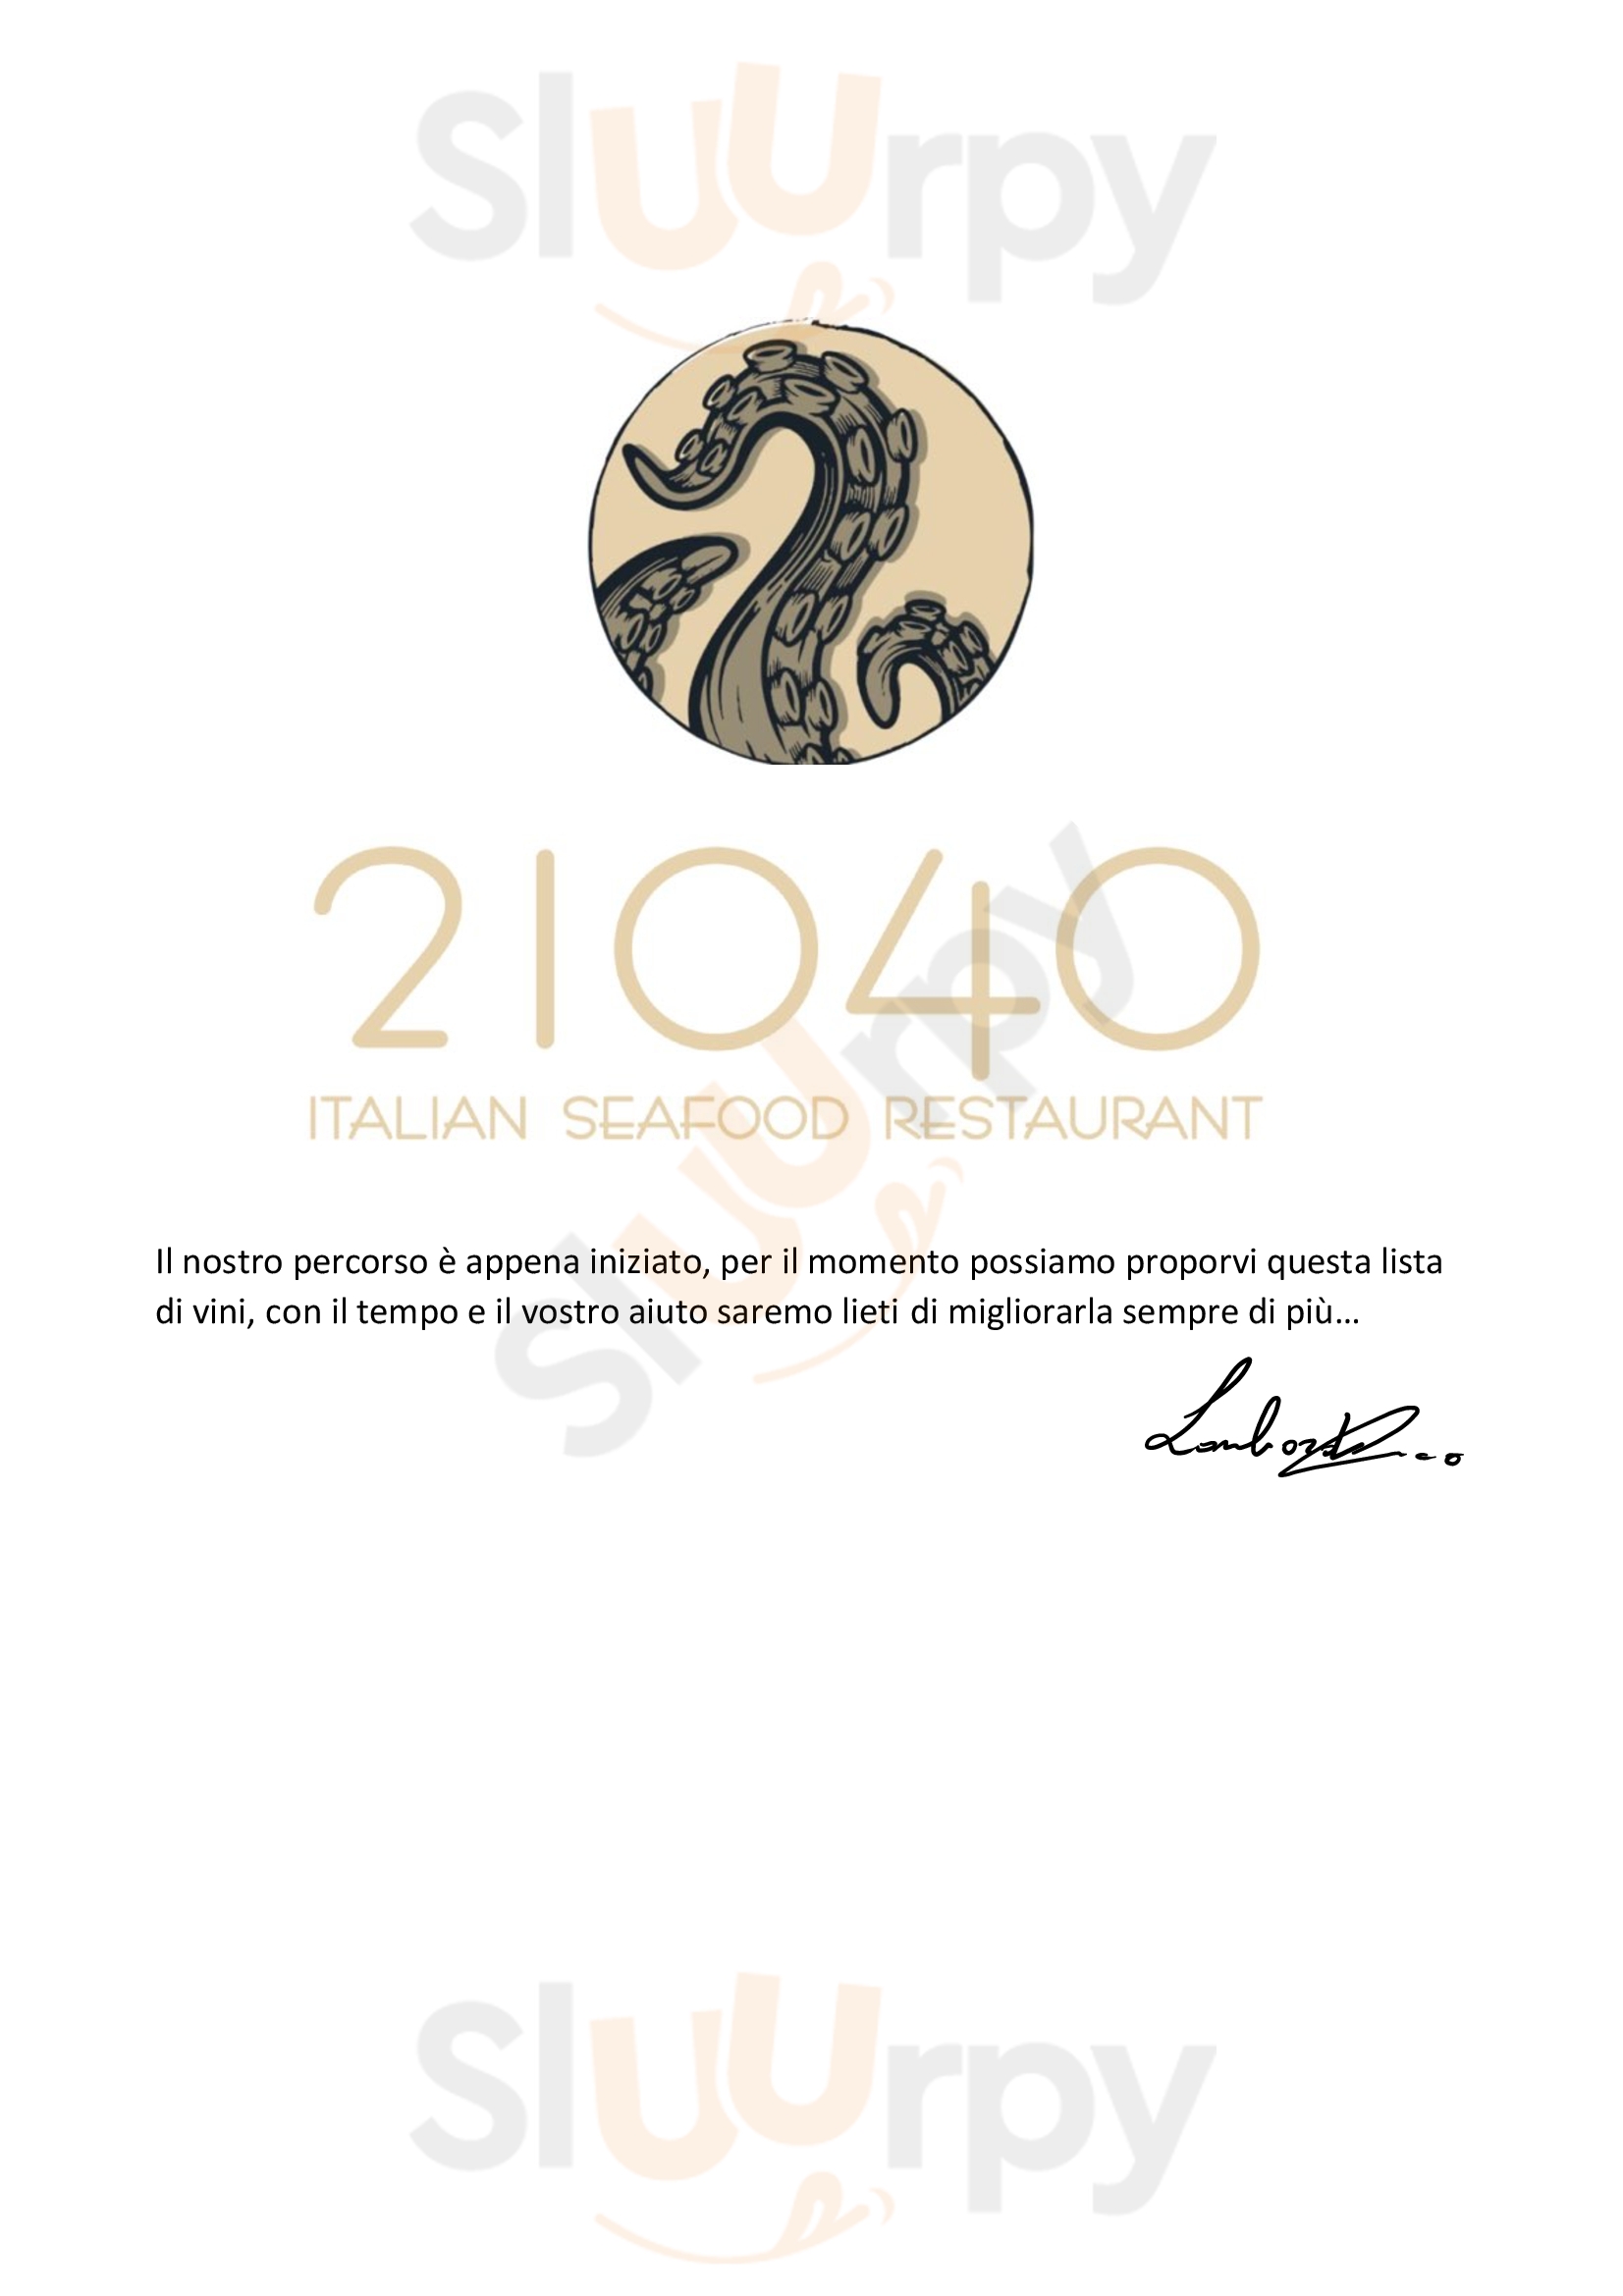 21040 Restaurant Vigevano menù 1 pagina